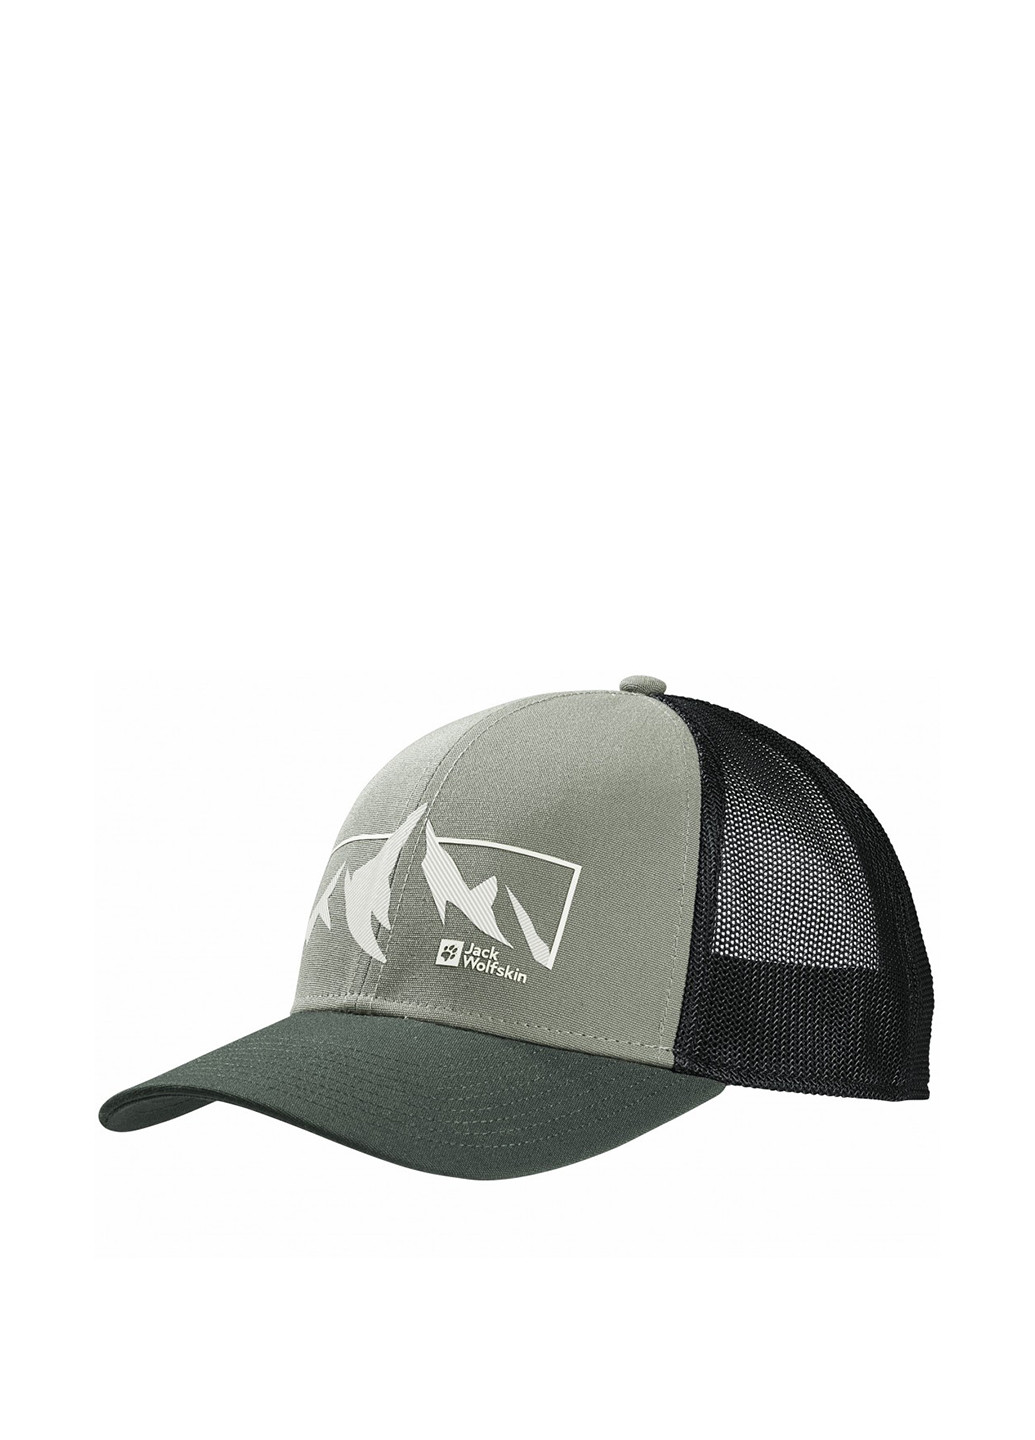 Кепка Jack Wolfskin brand cap (292936275)